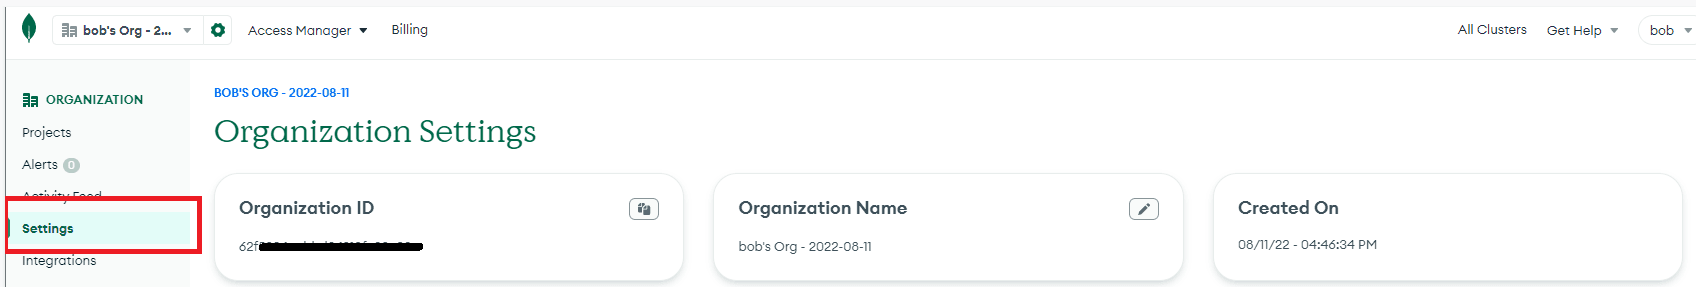 Organization Settings, Organizational ID lookup